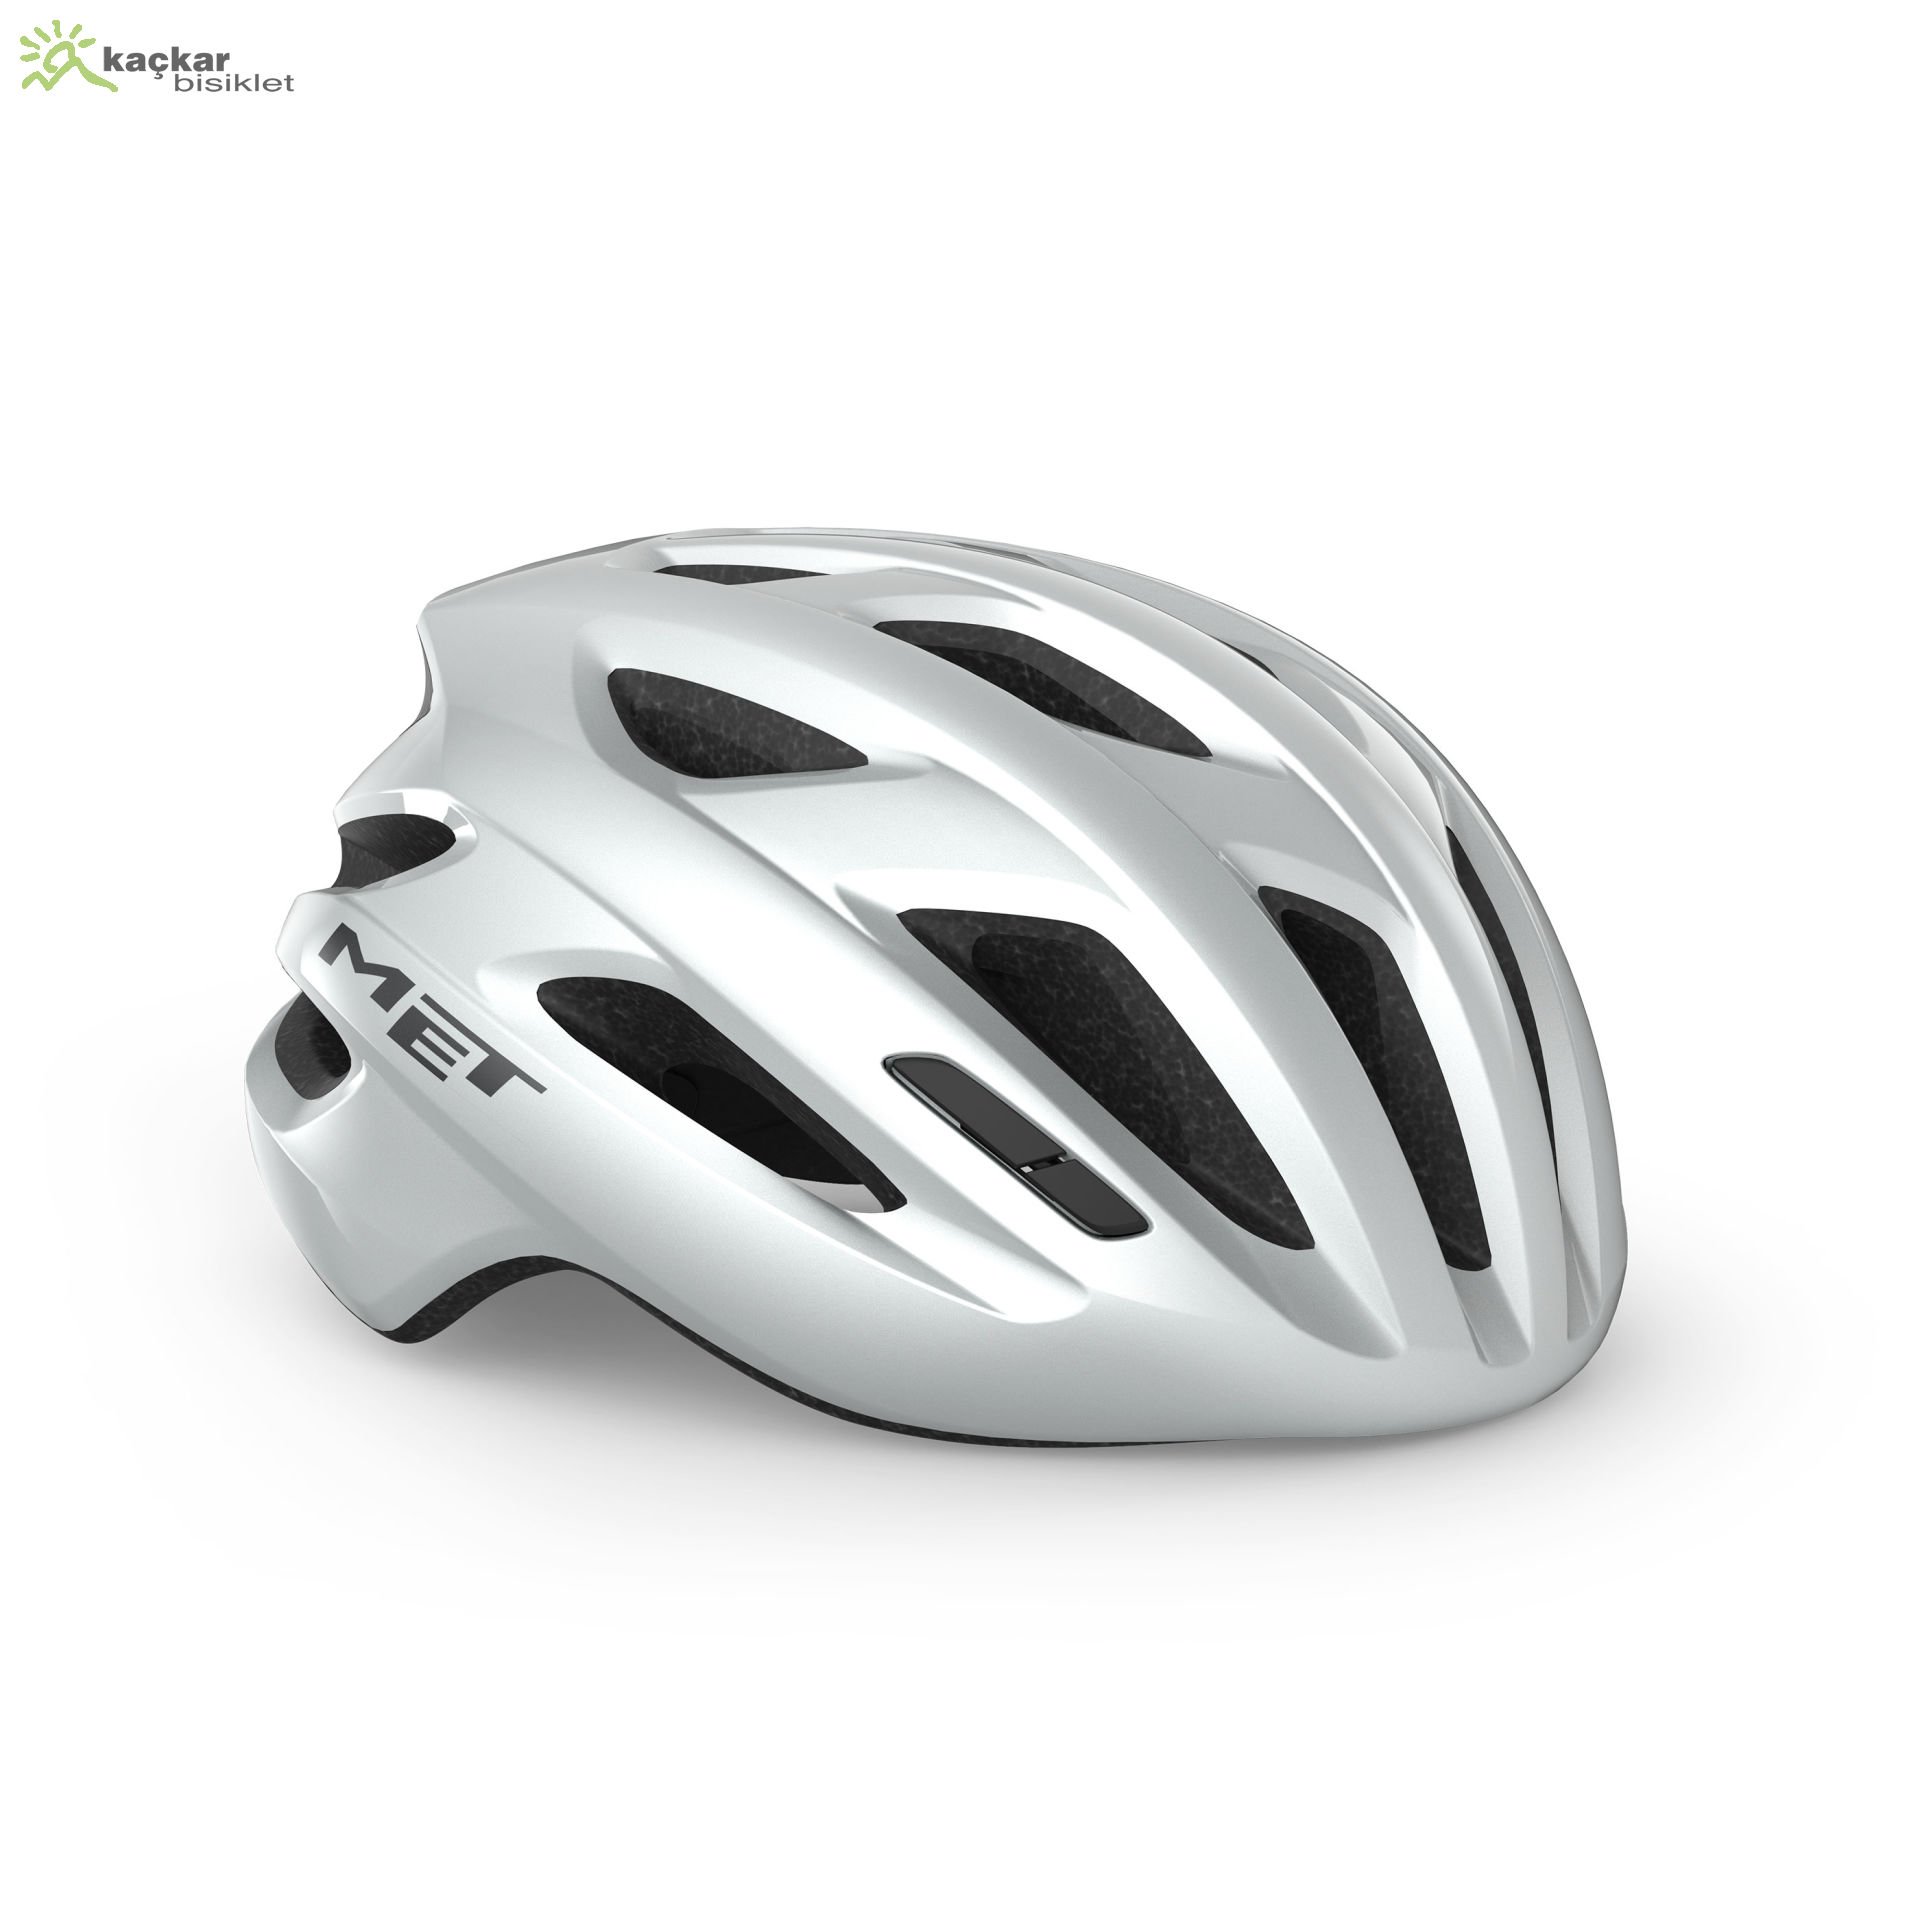 MET Helmets Idolo Mips Road Kask Universal Size White / Glossy